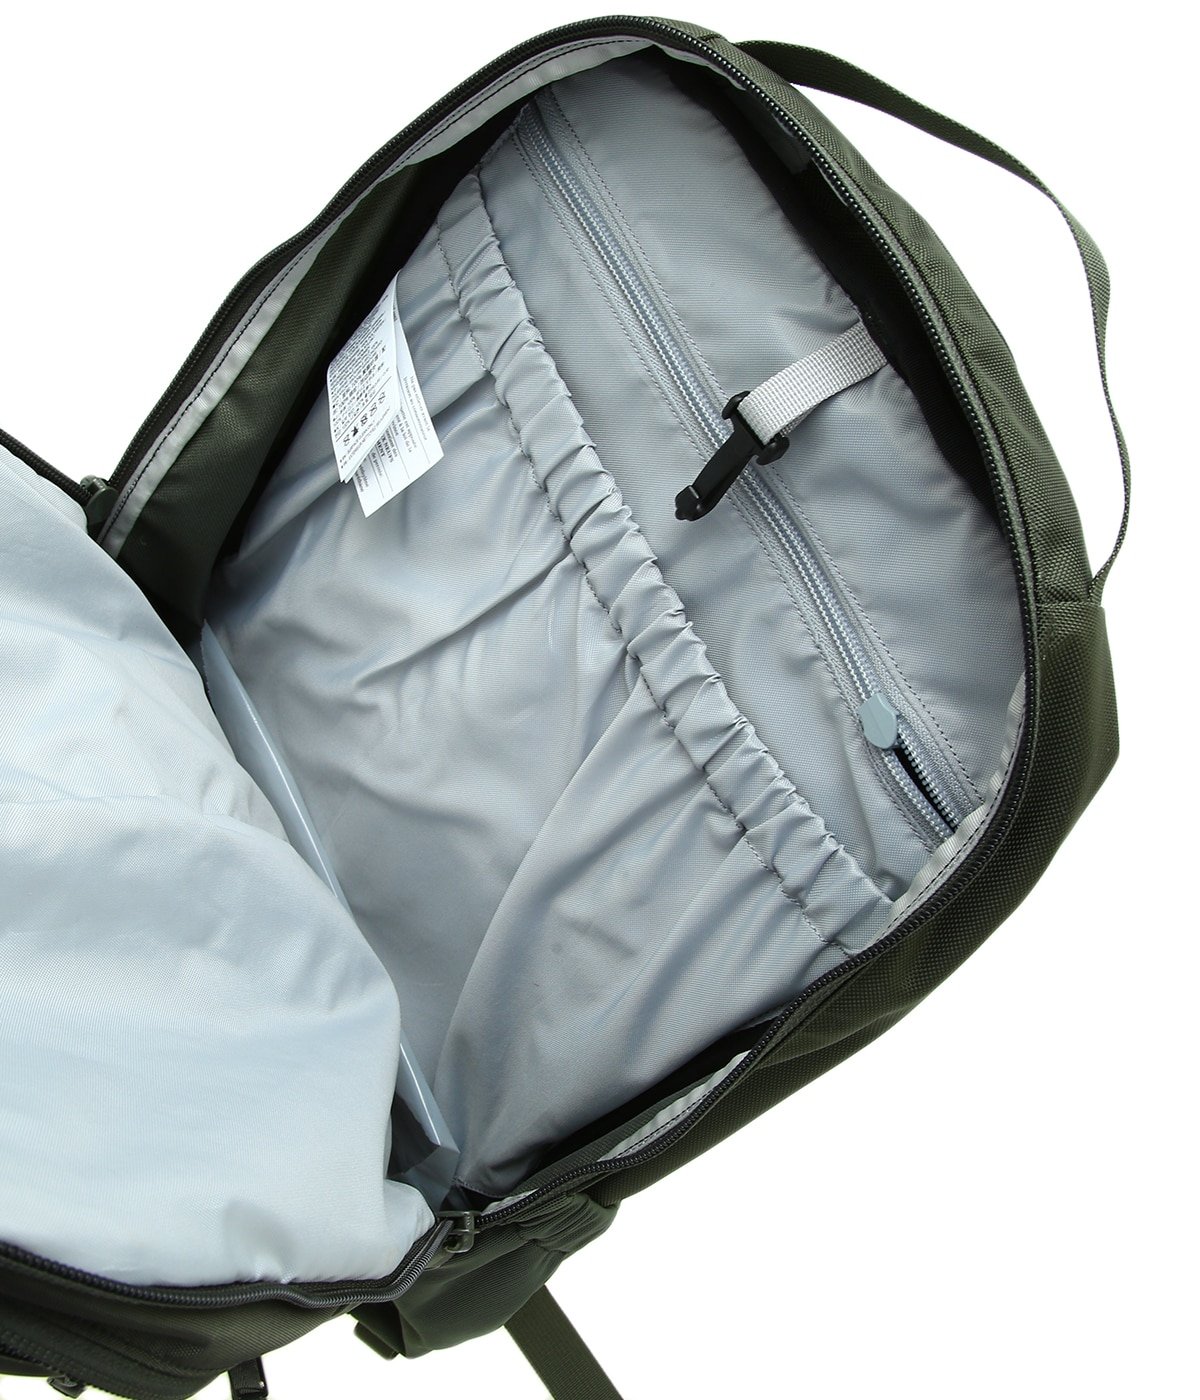 Mantis 26 Backpack | ARC’TERYX(アークテリクス) / バッグ バックパック (メンズ レディース)の通販